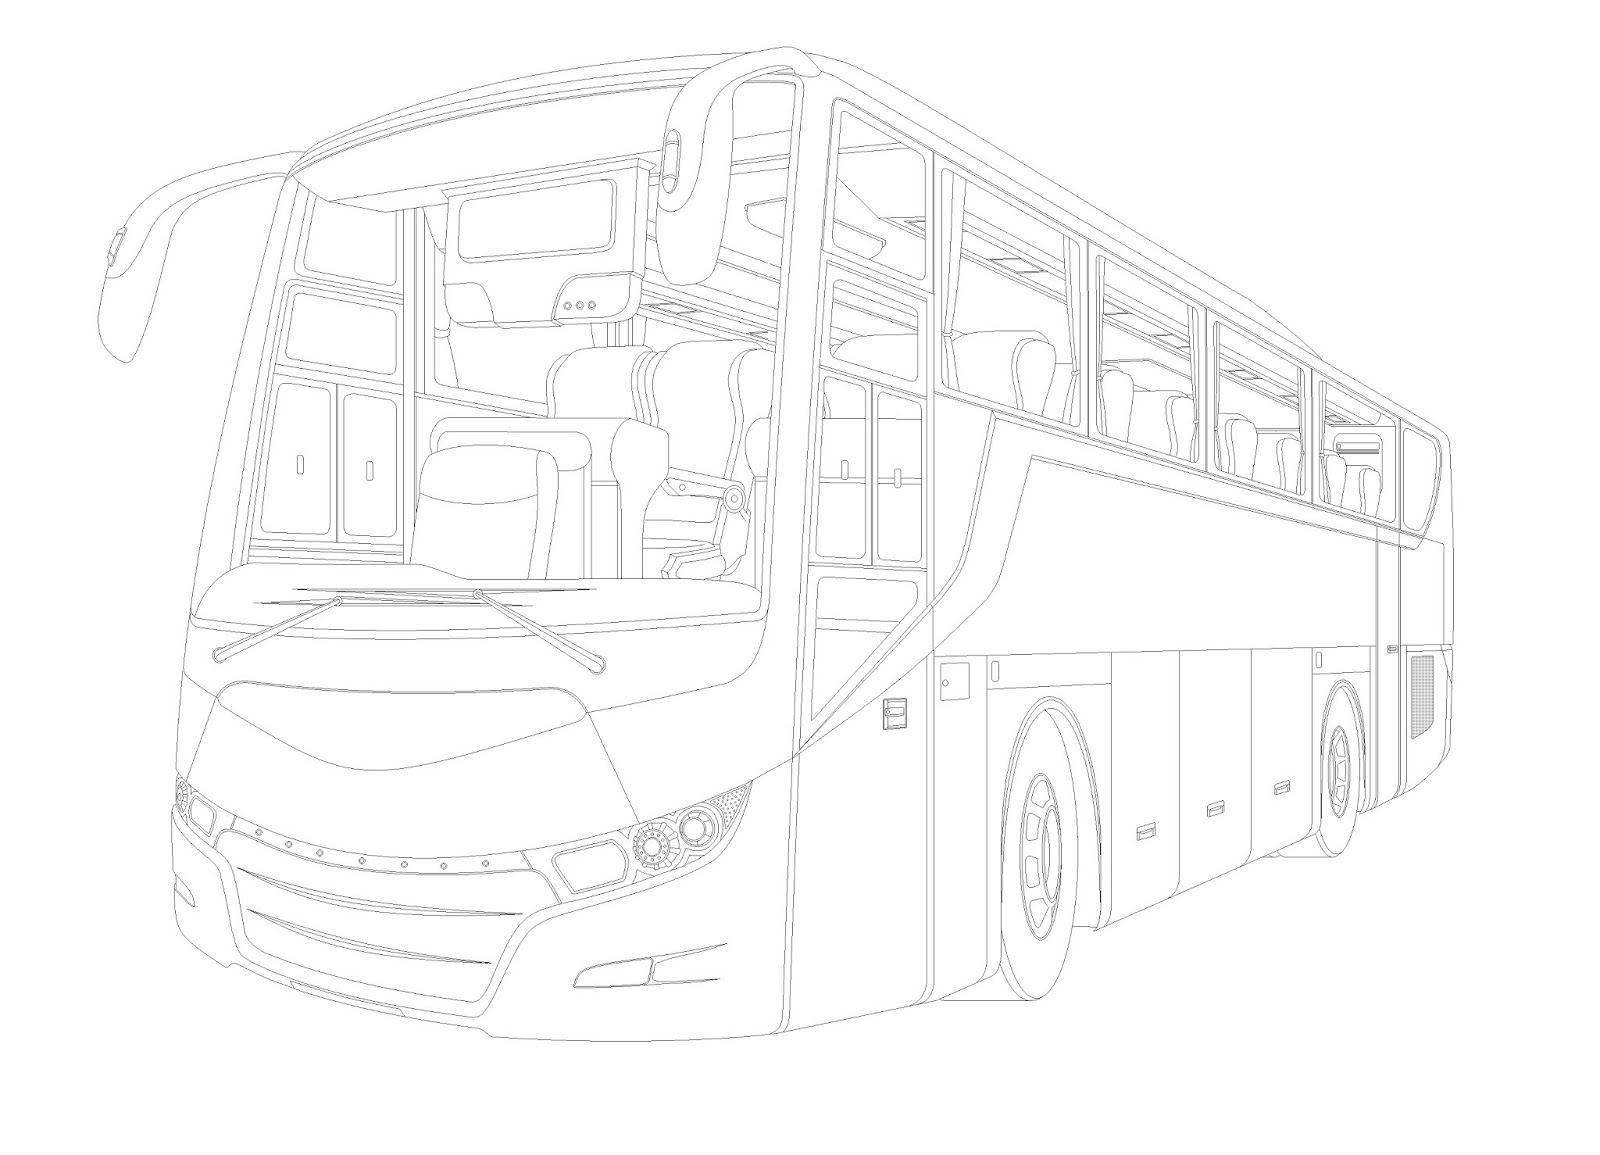 Design Bus Edelweis HD V 20 Terbaru KAROSERI INDONESIA